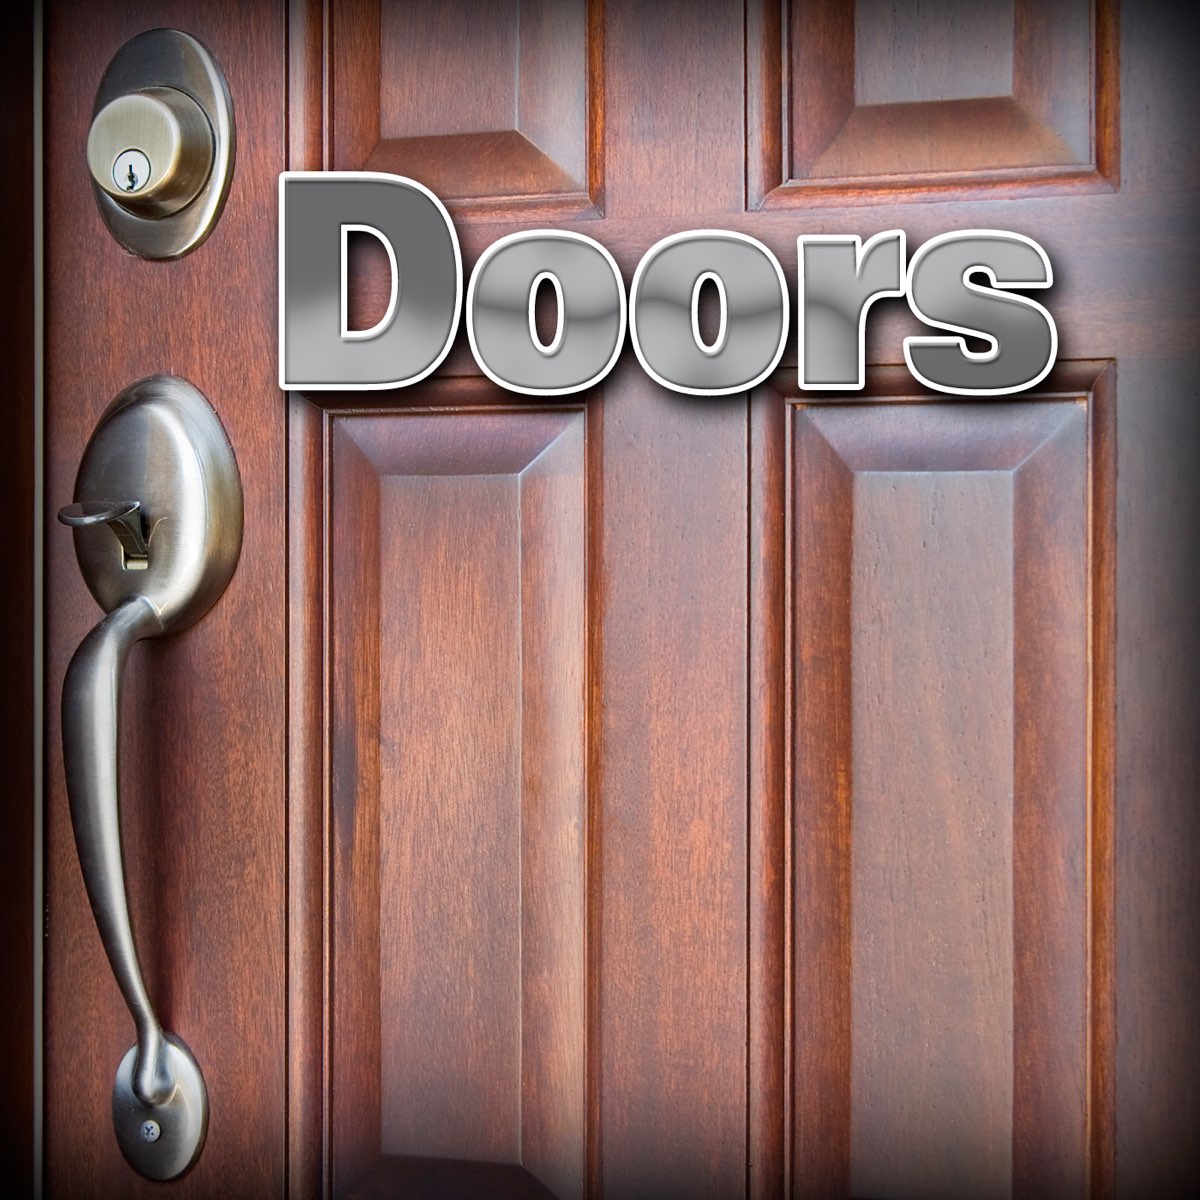 Звук двери квартиры. Звук двери. Дверь музыка. Доктор Дорс двери. Doors звуки.